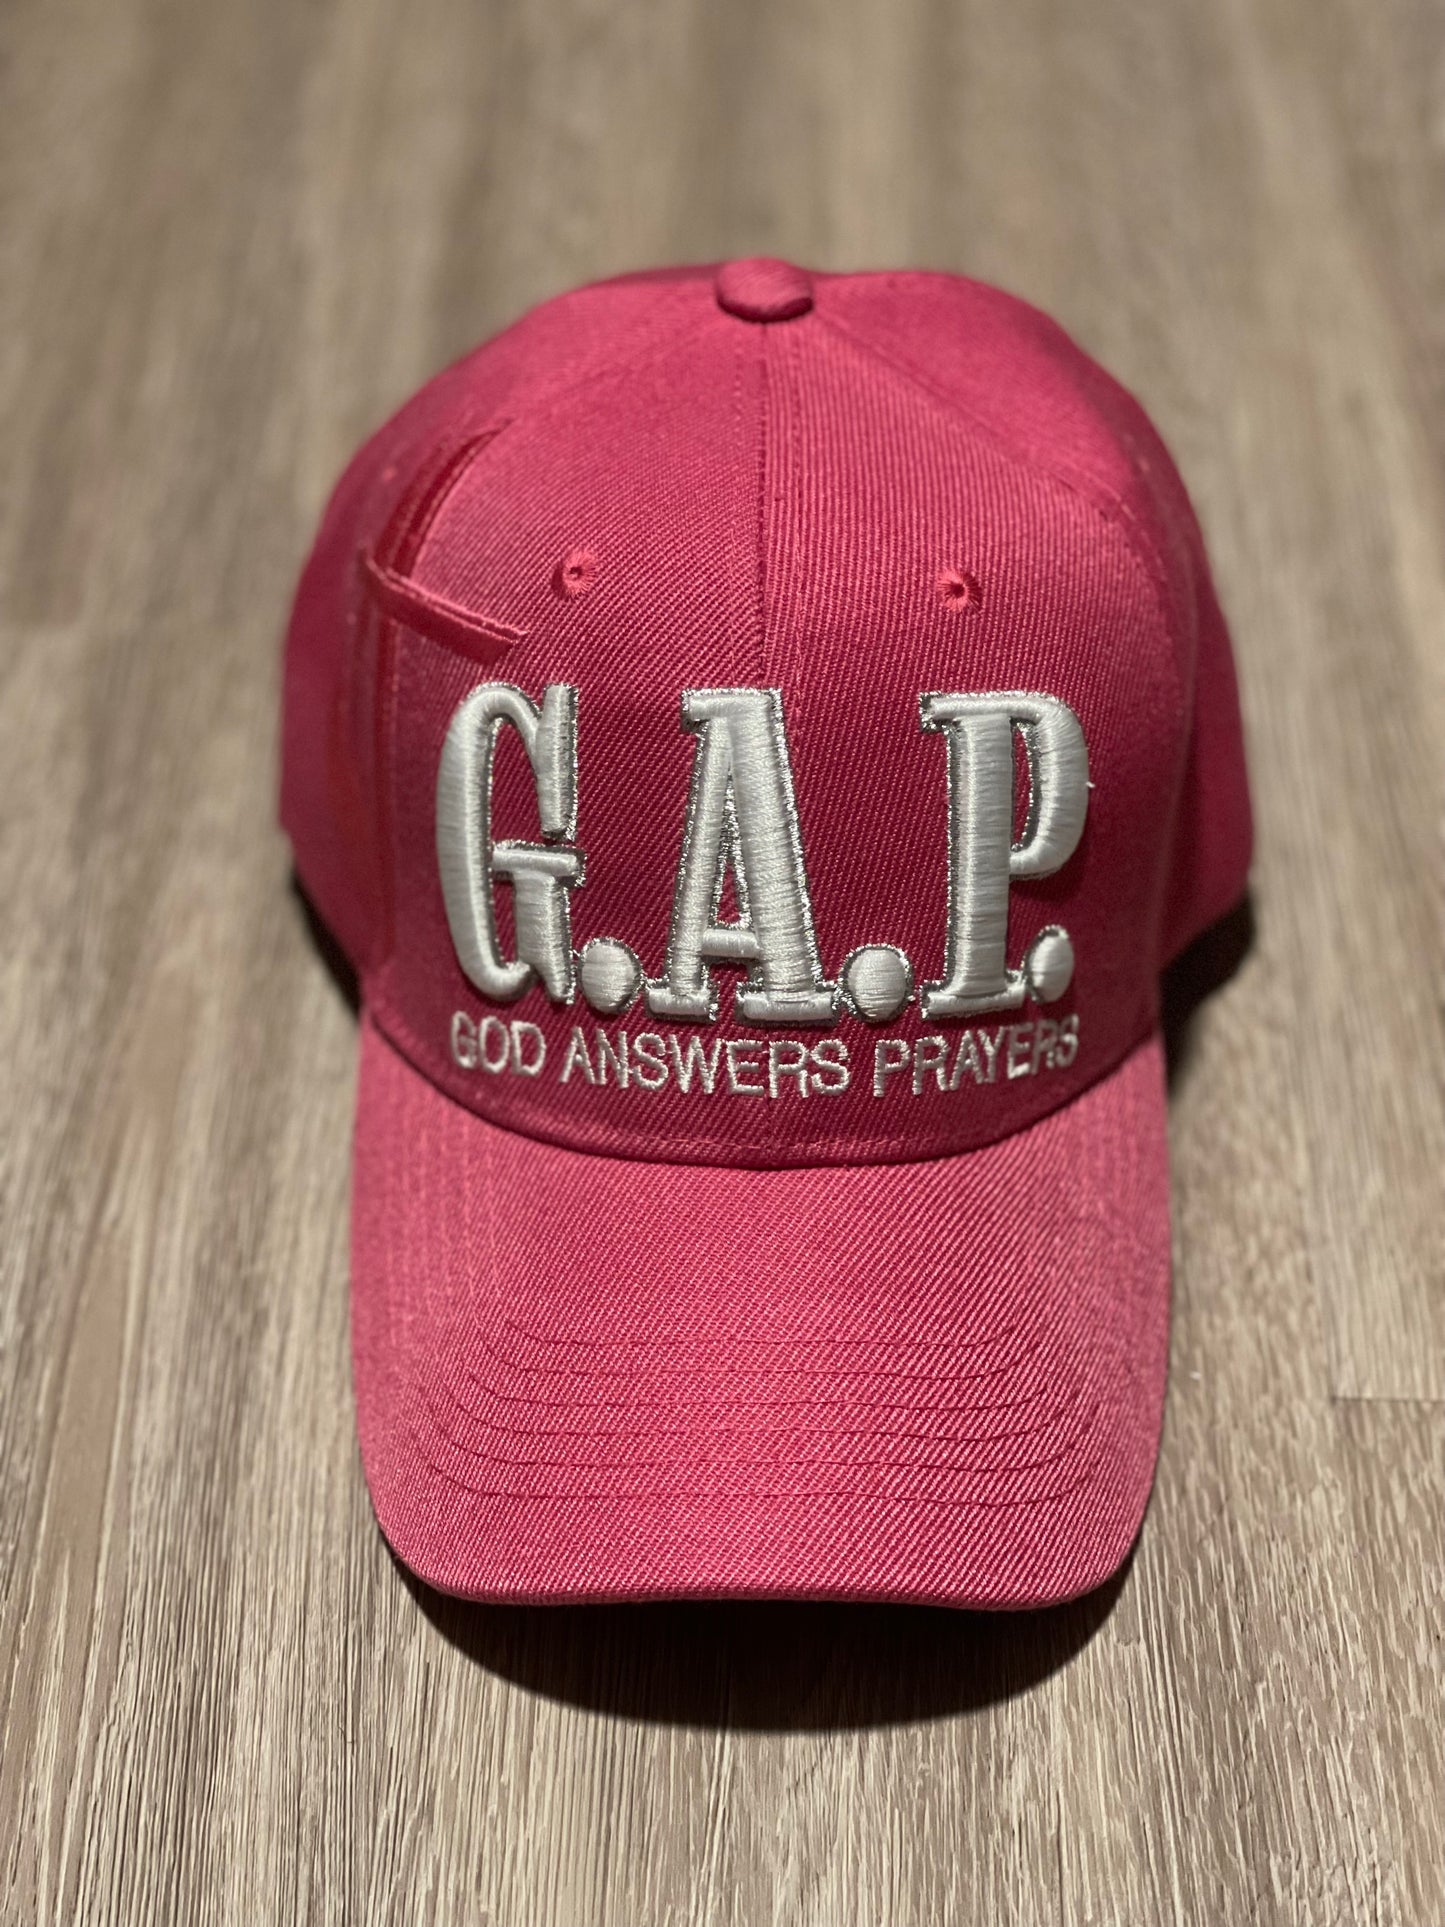 G.A.P. (God Answers Prayers) Baseball Cap - Pink